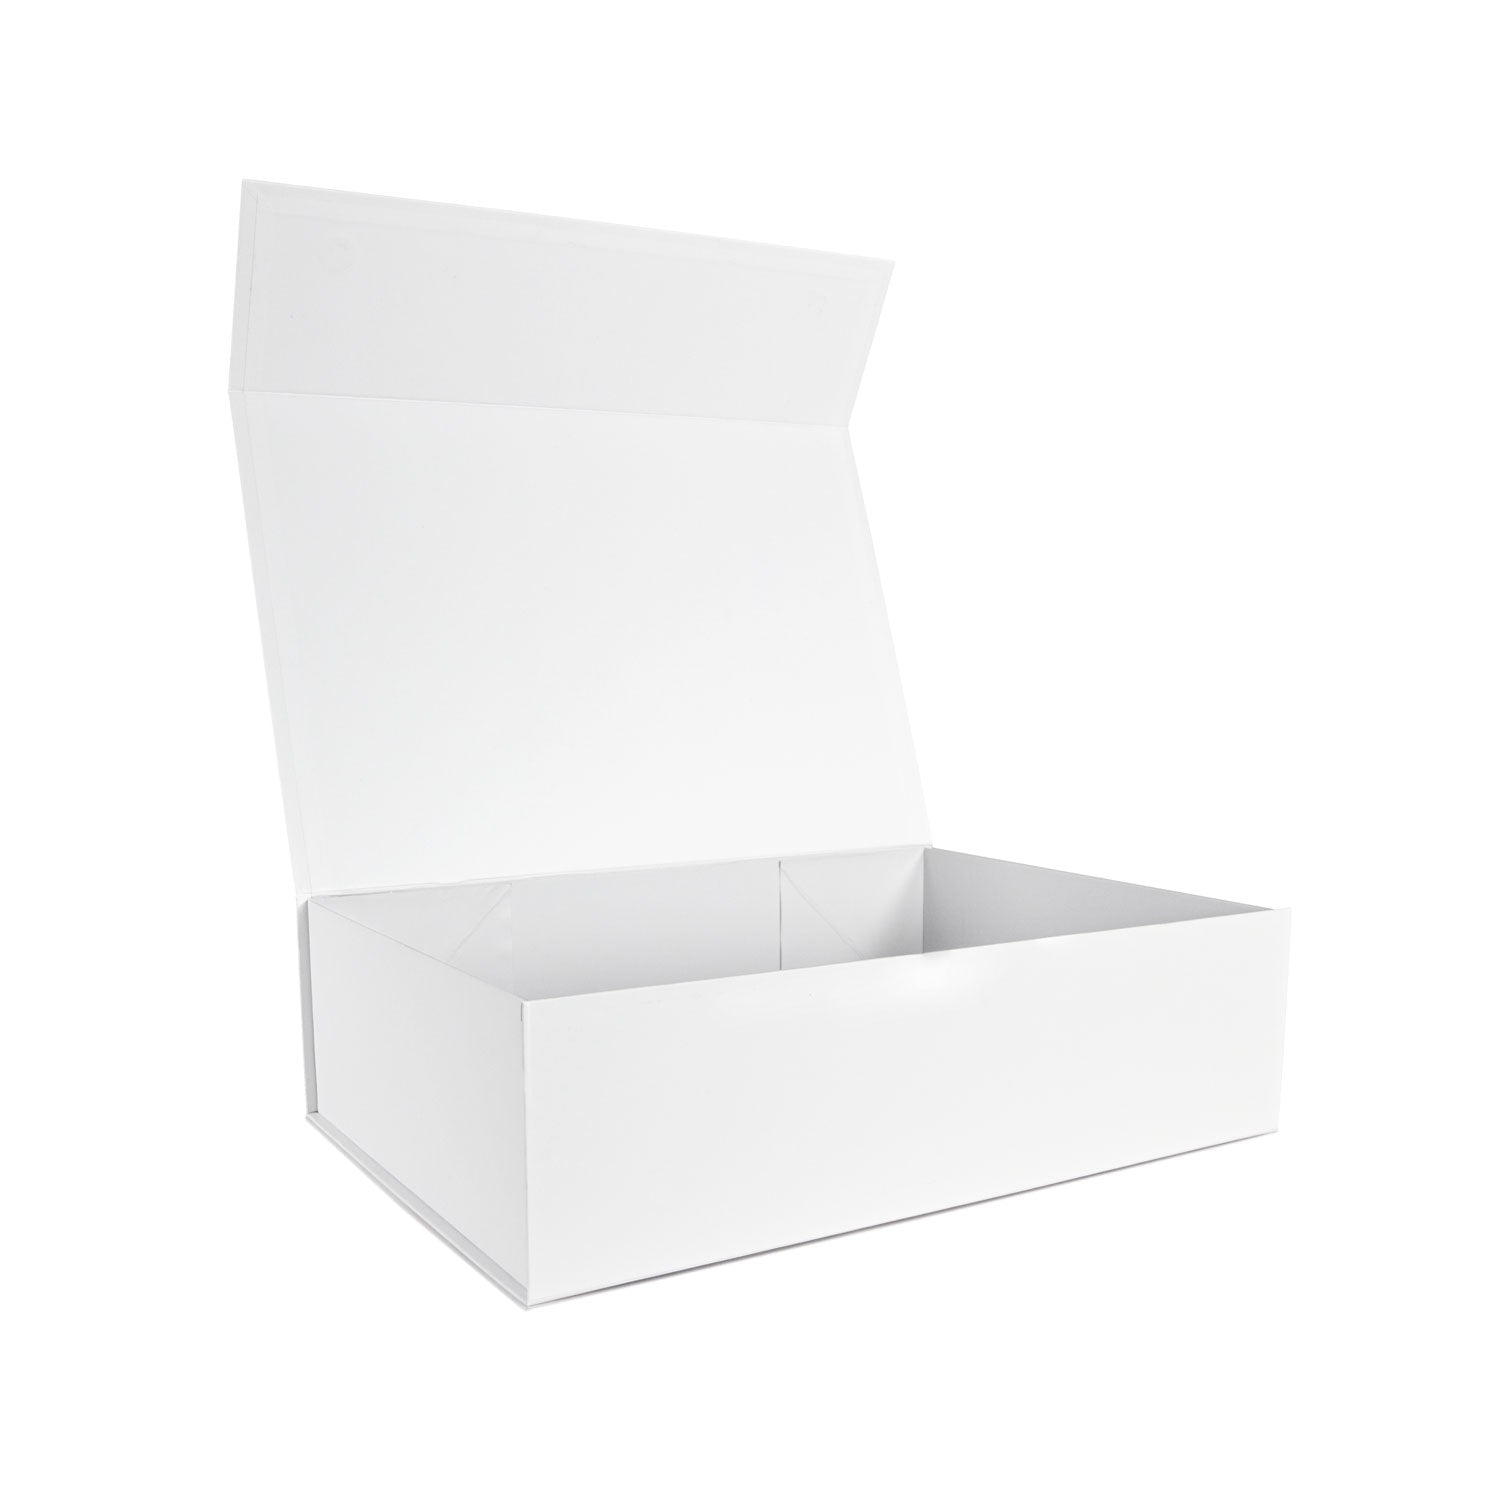 Empty Large custom printed White Gift Box | NEON Packaging